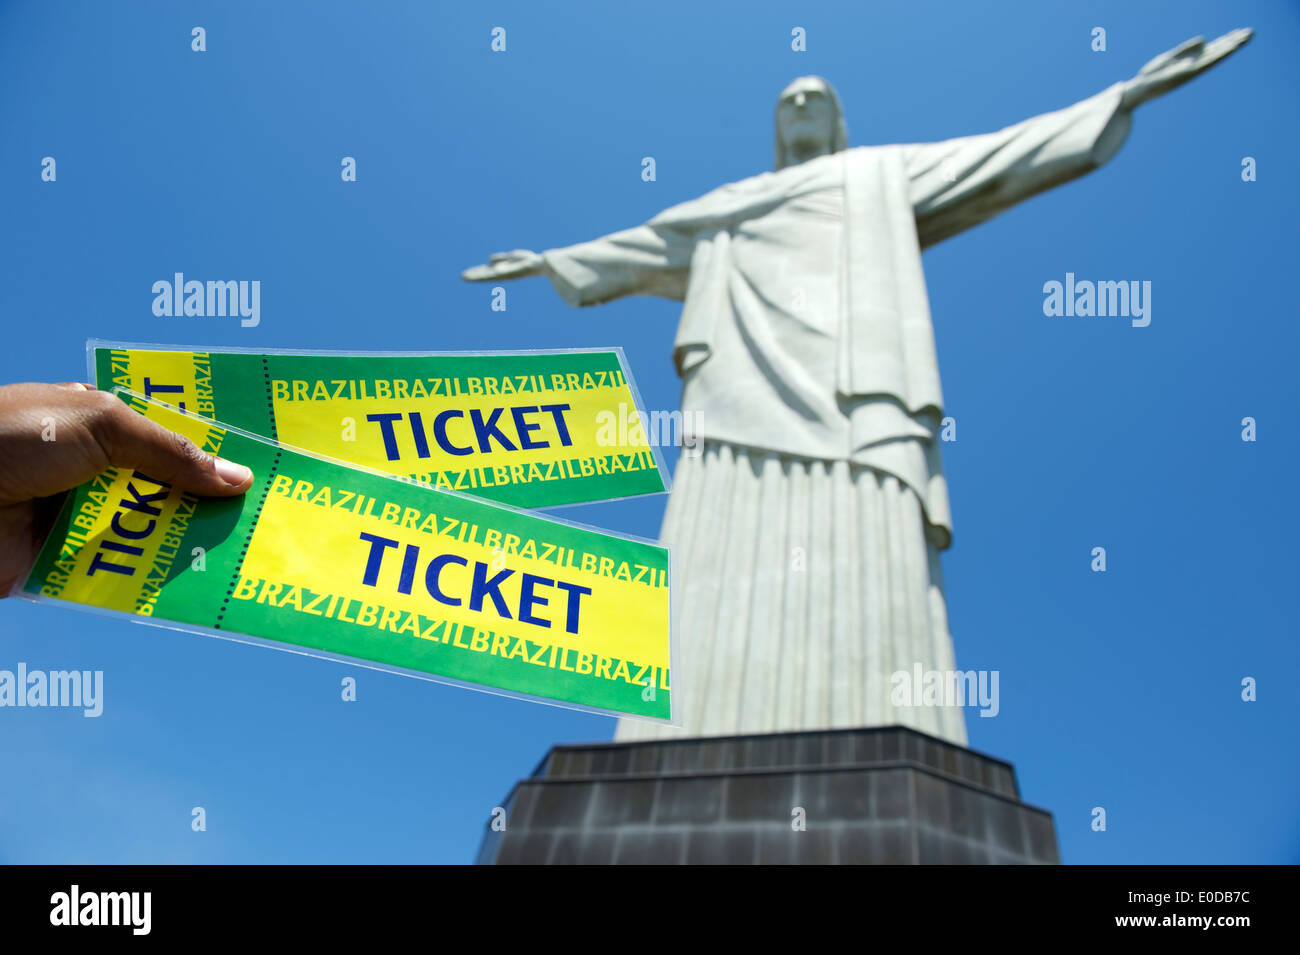 Brazilian hand holding pair of tickets at Corcovado in Rio de Janeiro Brazil Stock Photo